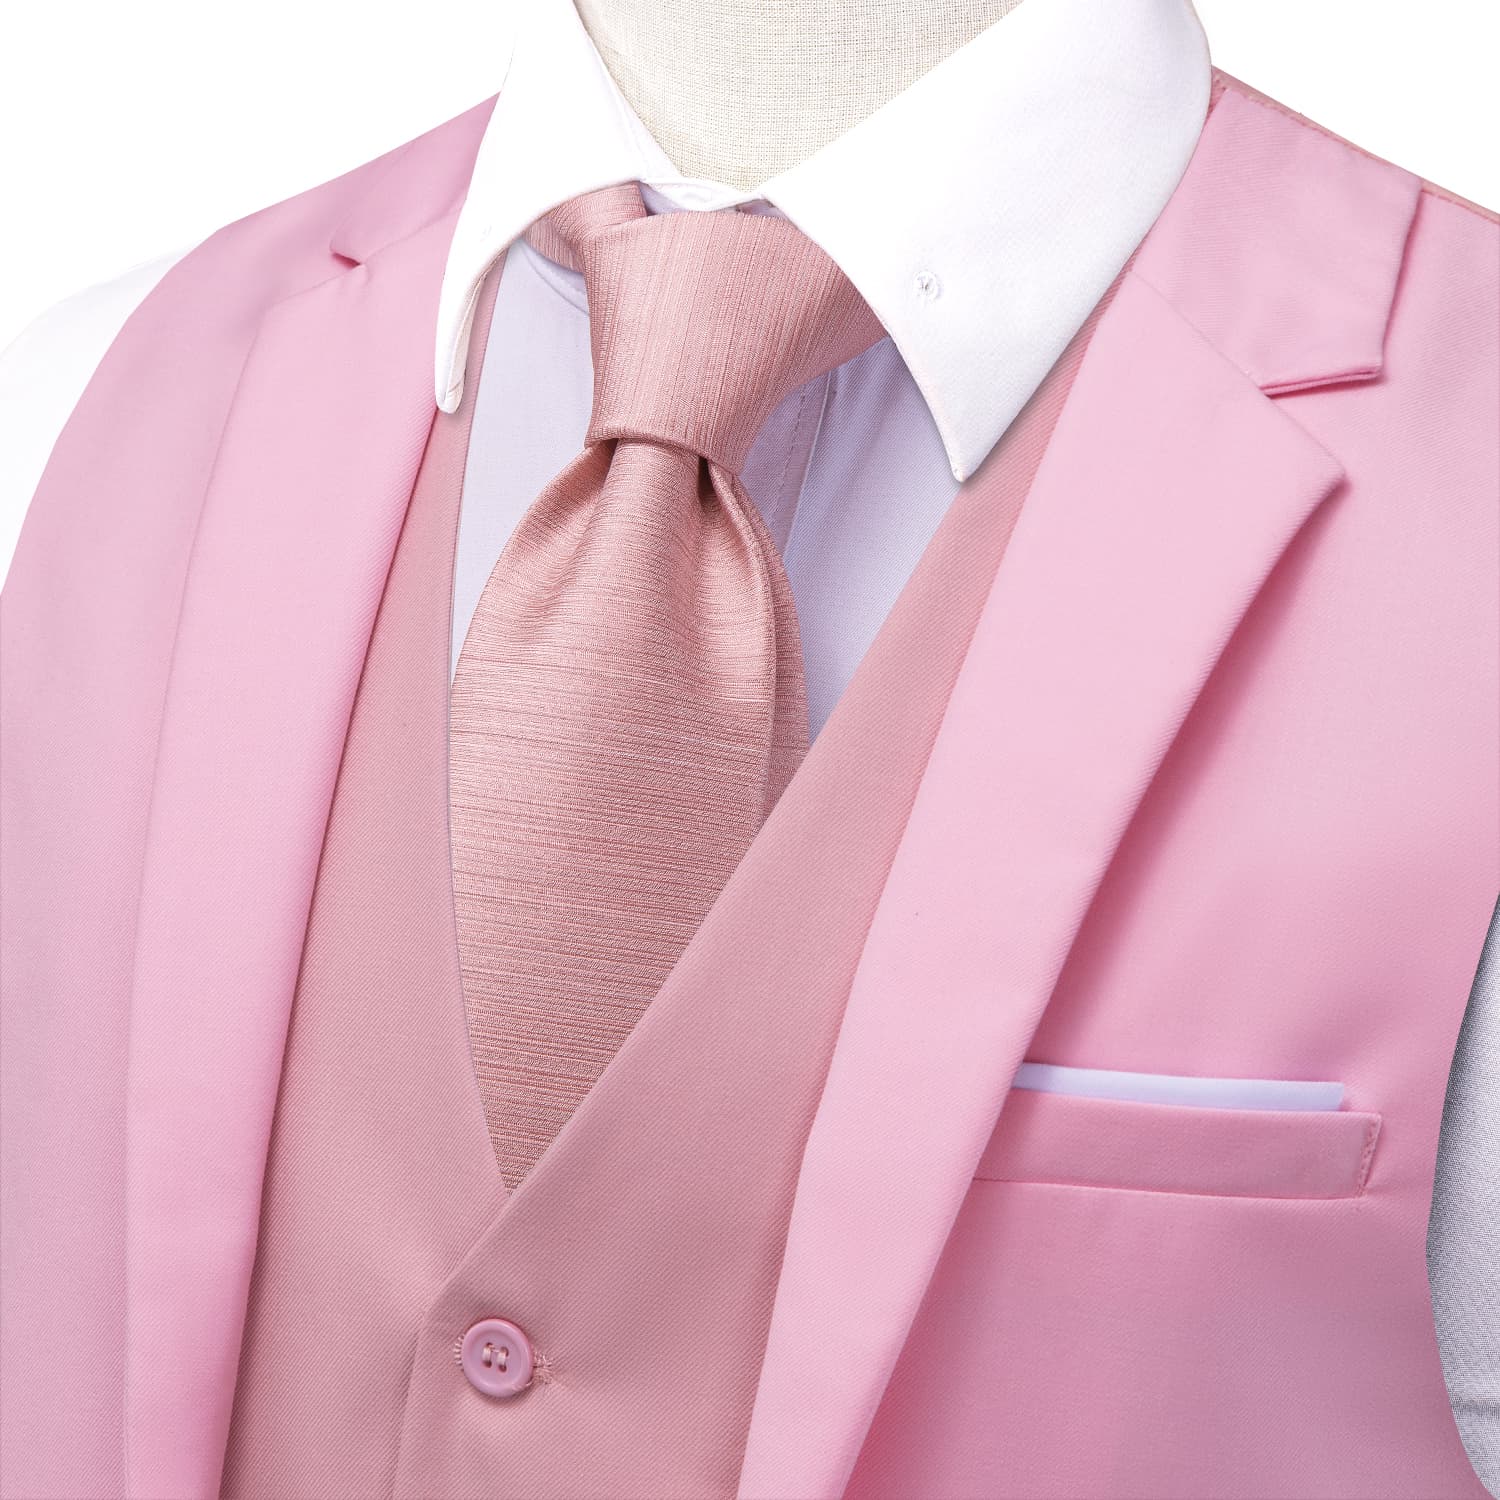 Suit Vest Layered Waistcoat Pink LightCoral Vests for Wedding